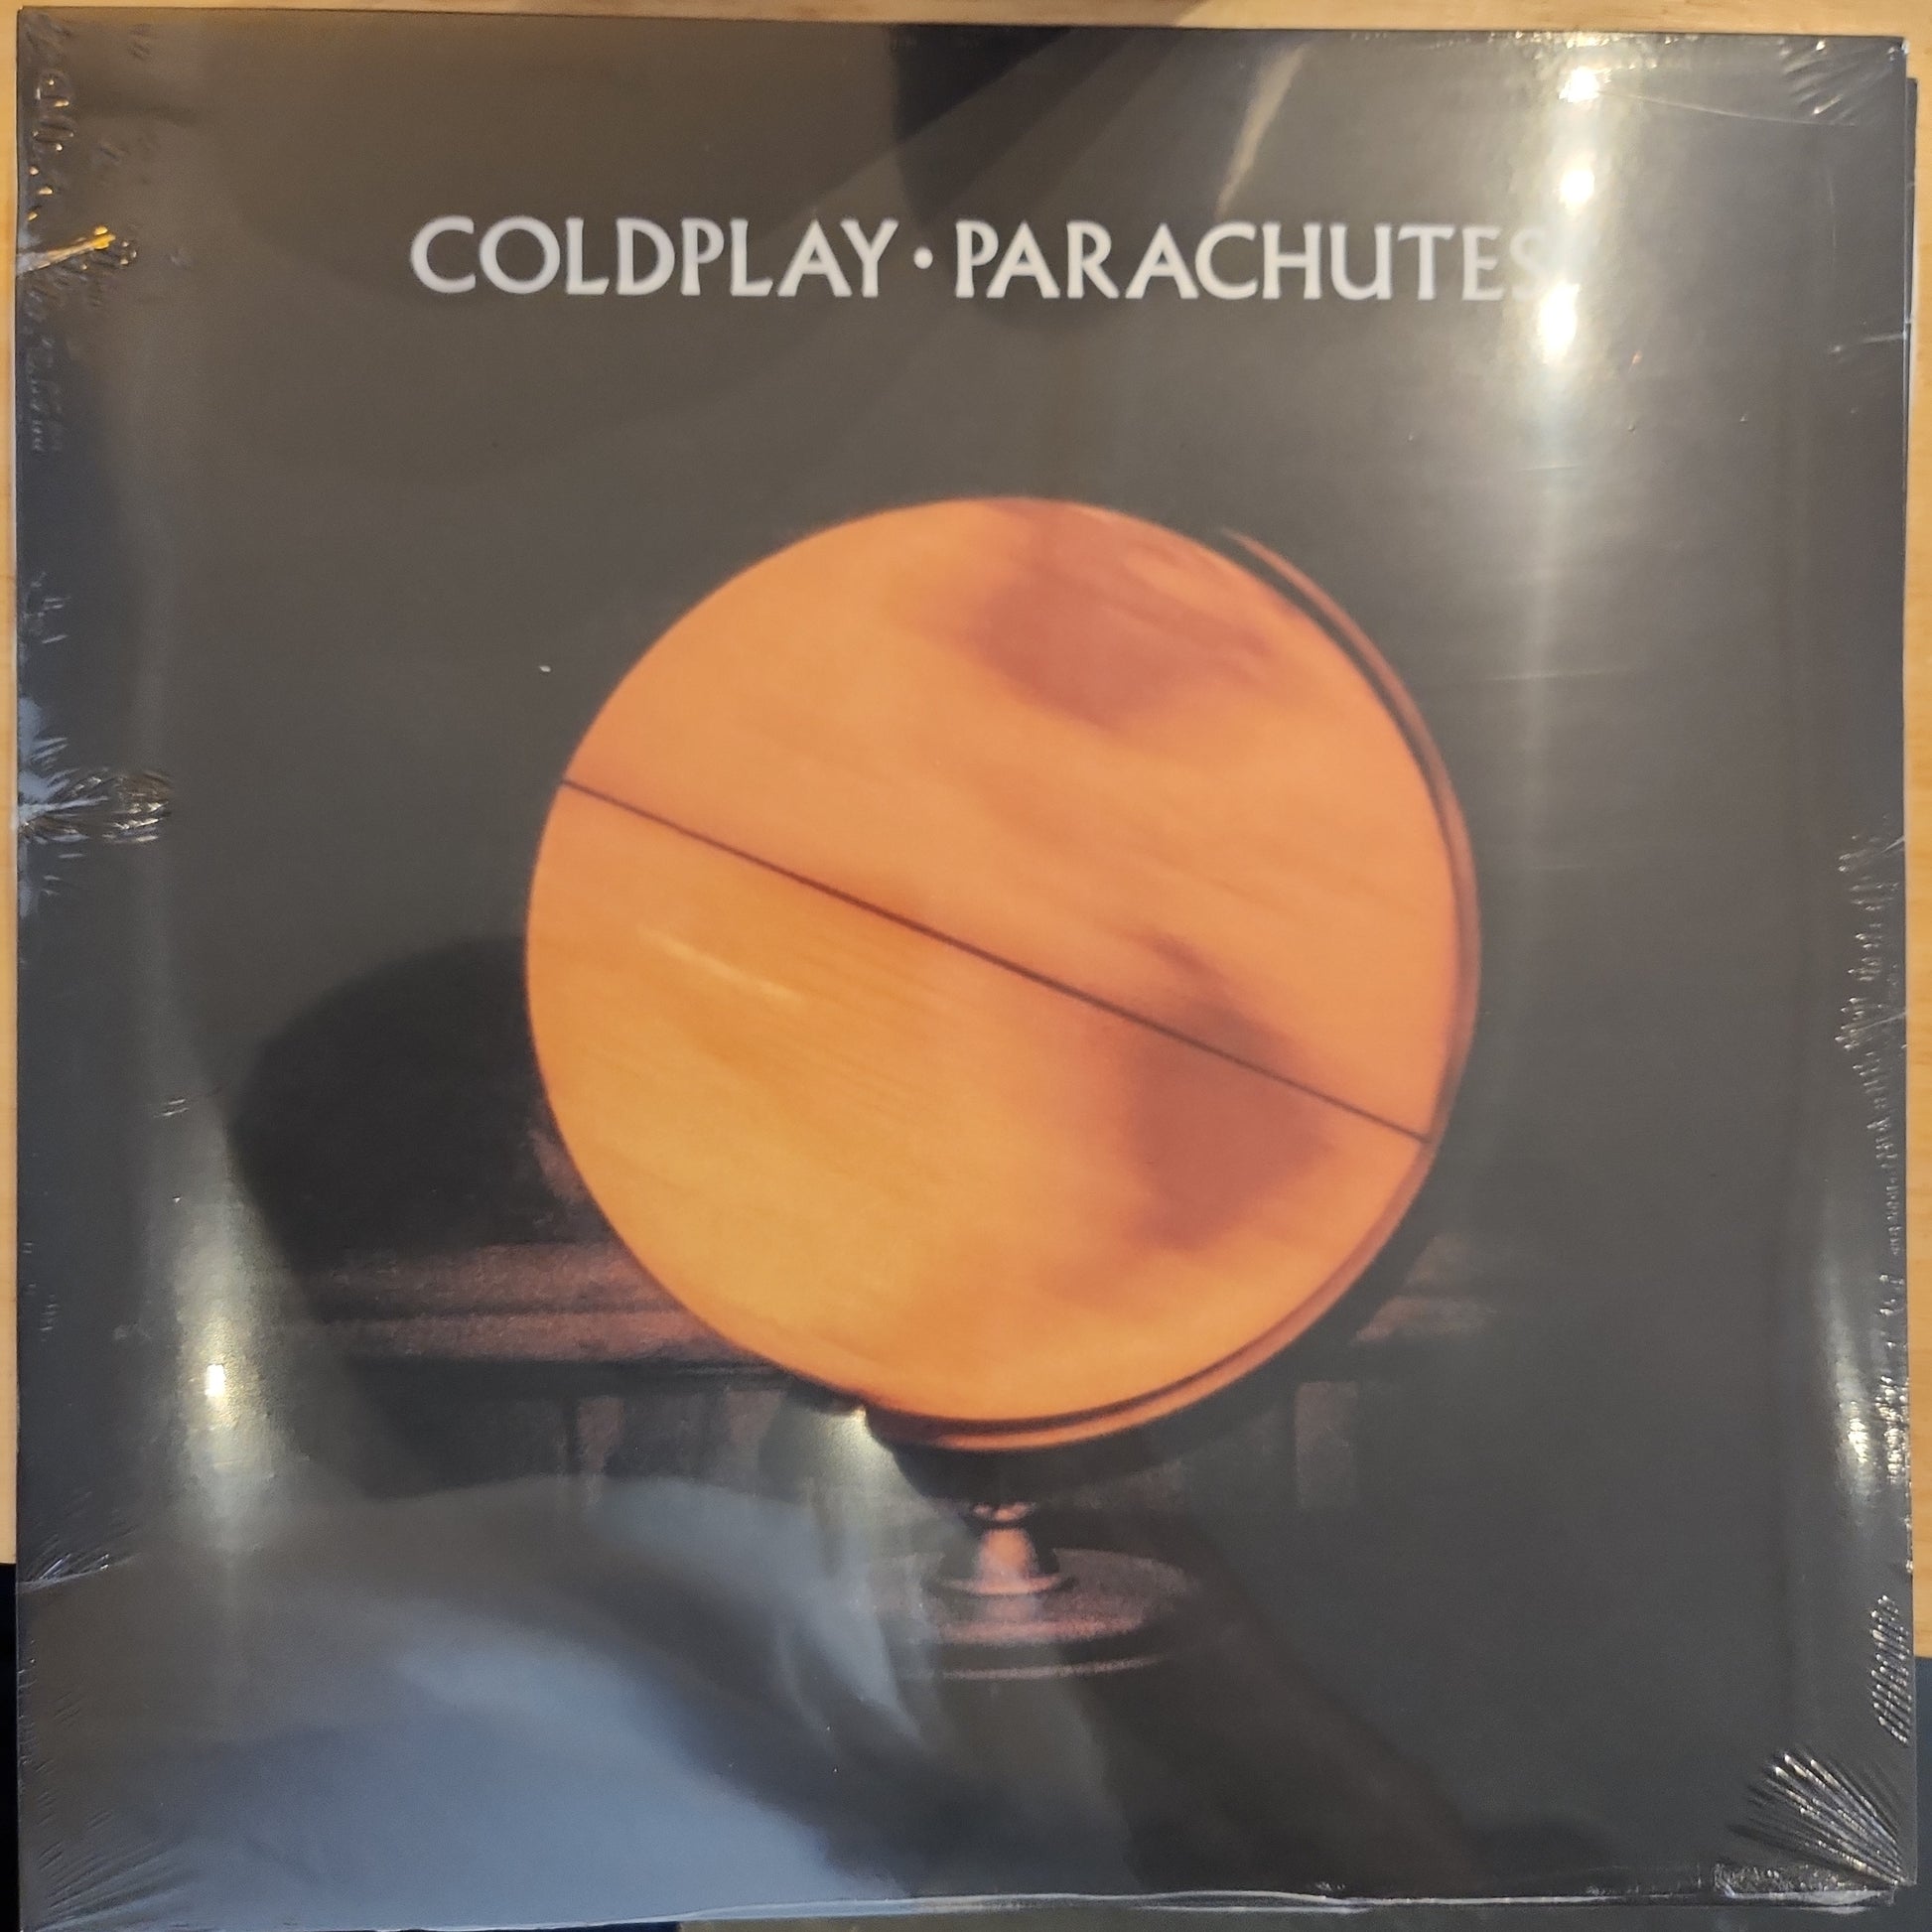 Vinile Coldplay - Parachutes